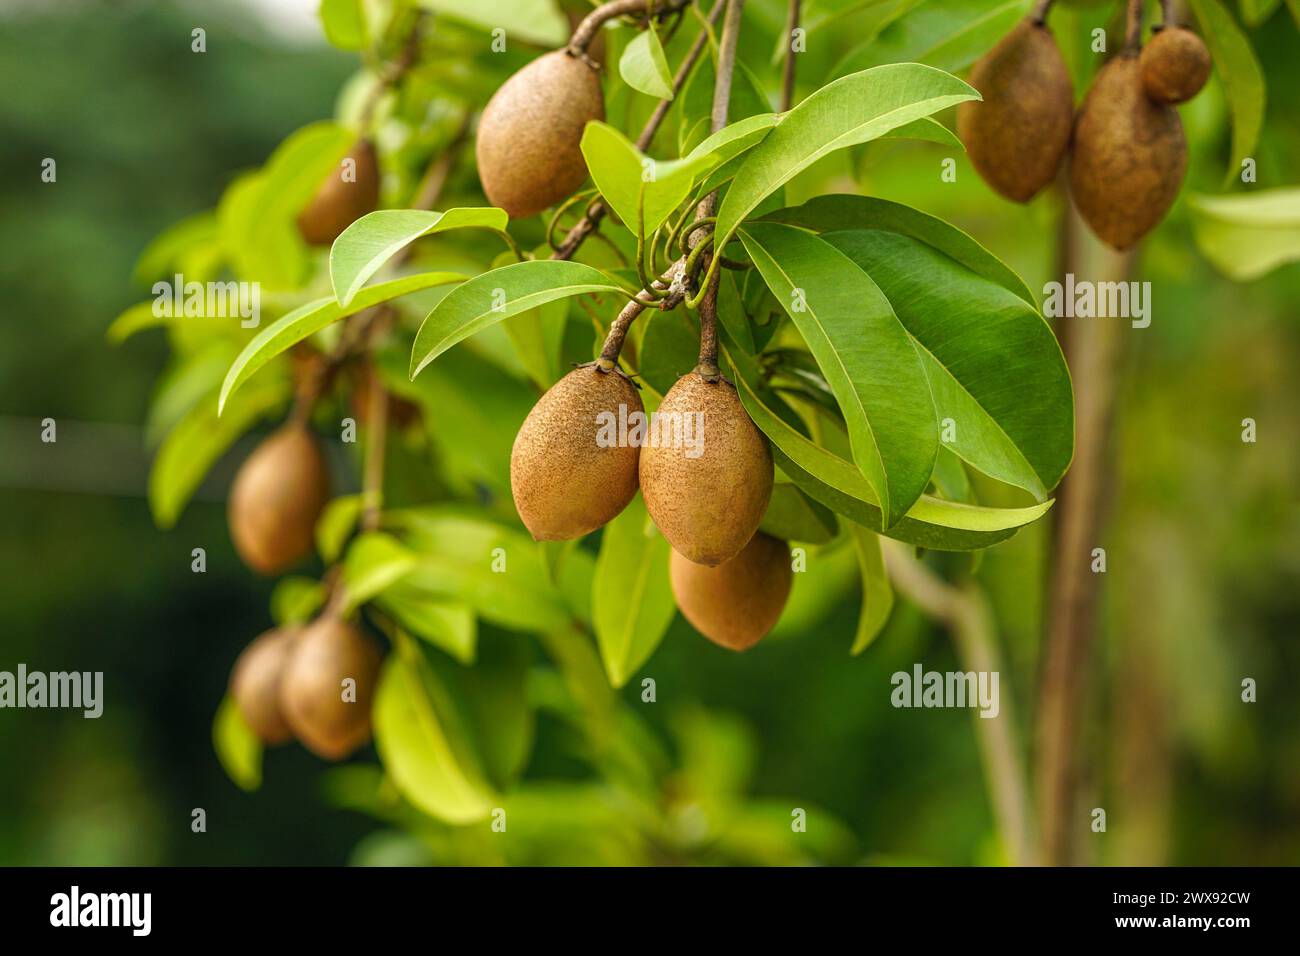 Sapodilla fruits close up view Stock Photo